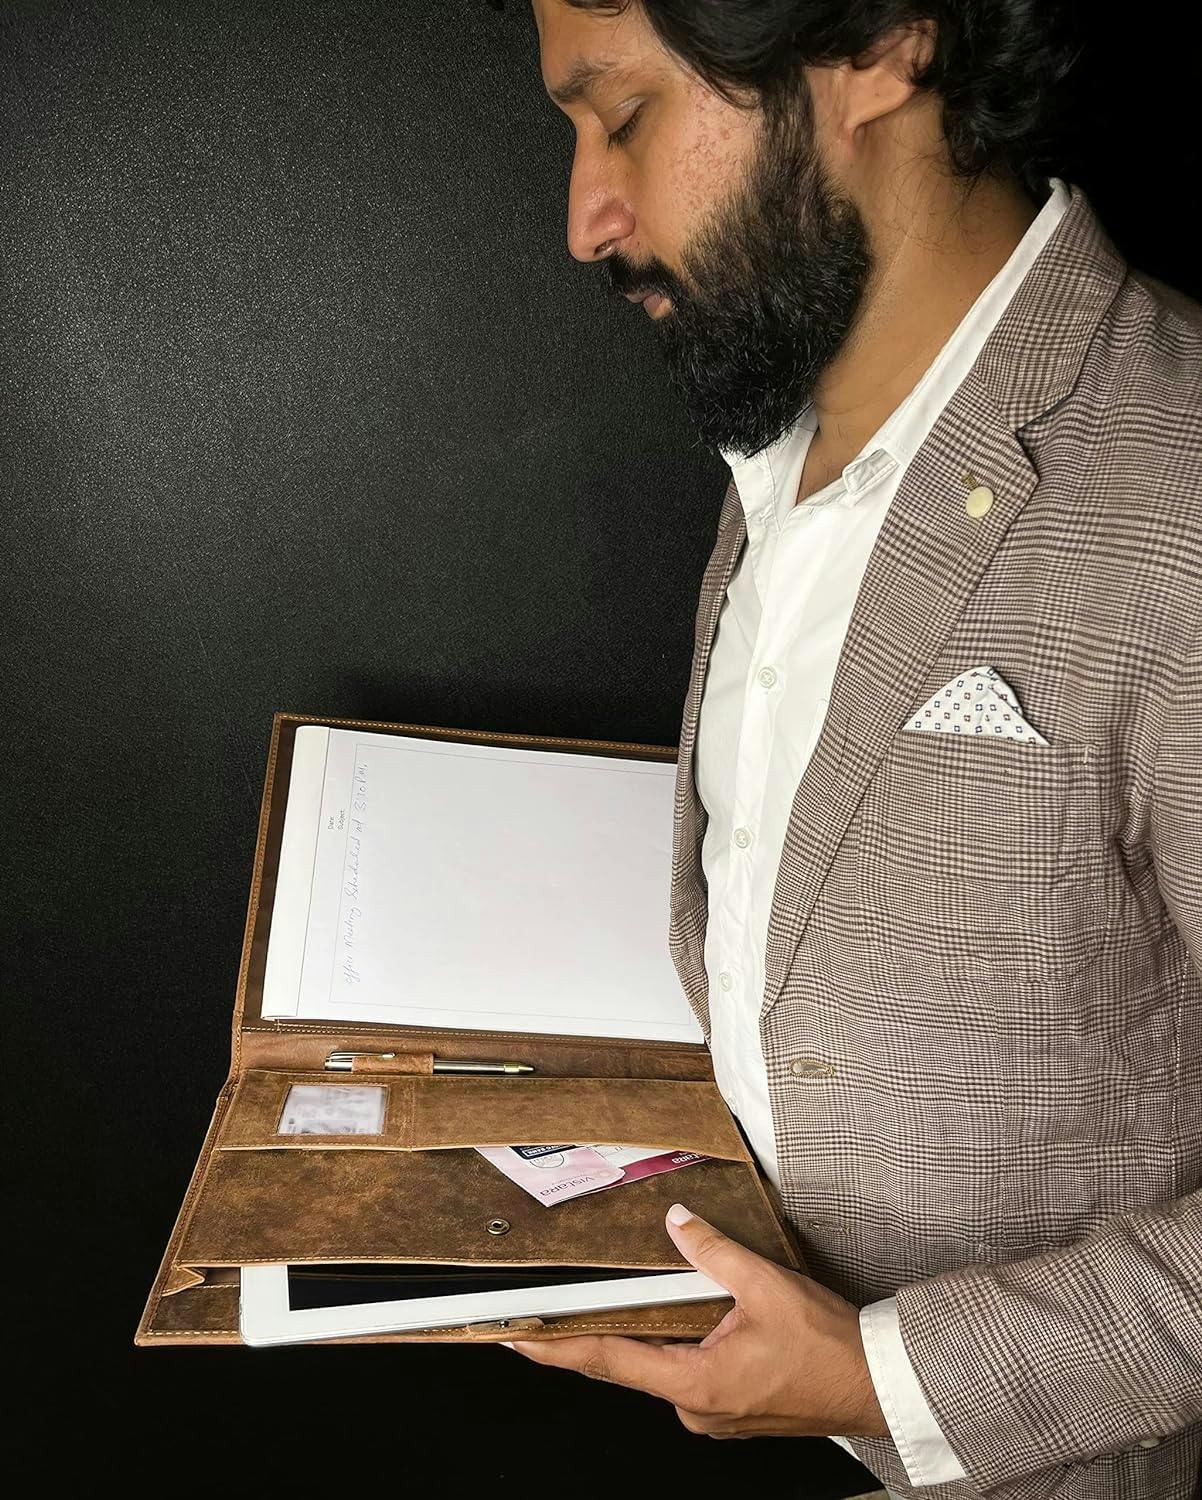 Elegant Full-Grain Leather Portfolio - Professional Organizer for Documents and Tablet